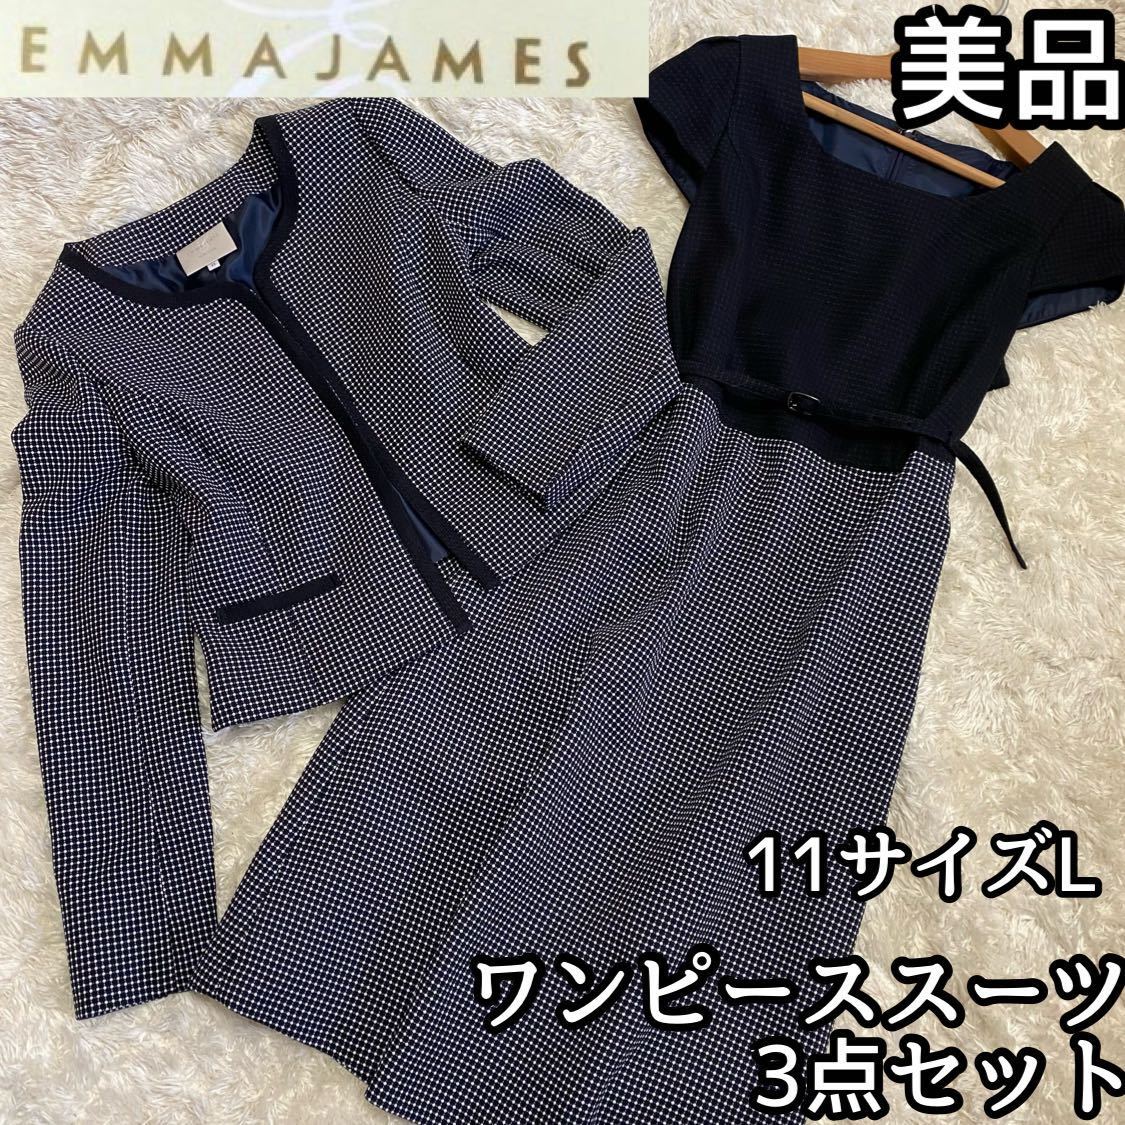 EMMA JAMES スーツ3点 セットアップ ワンピース 11号 - フォーマル